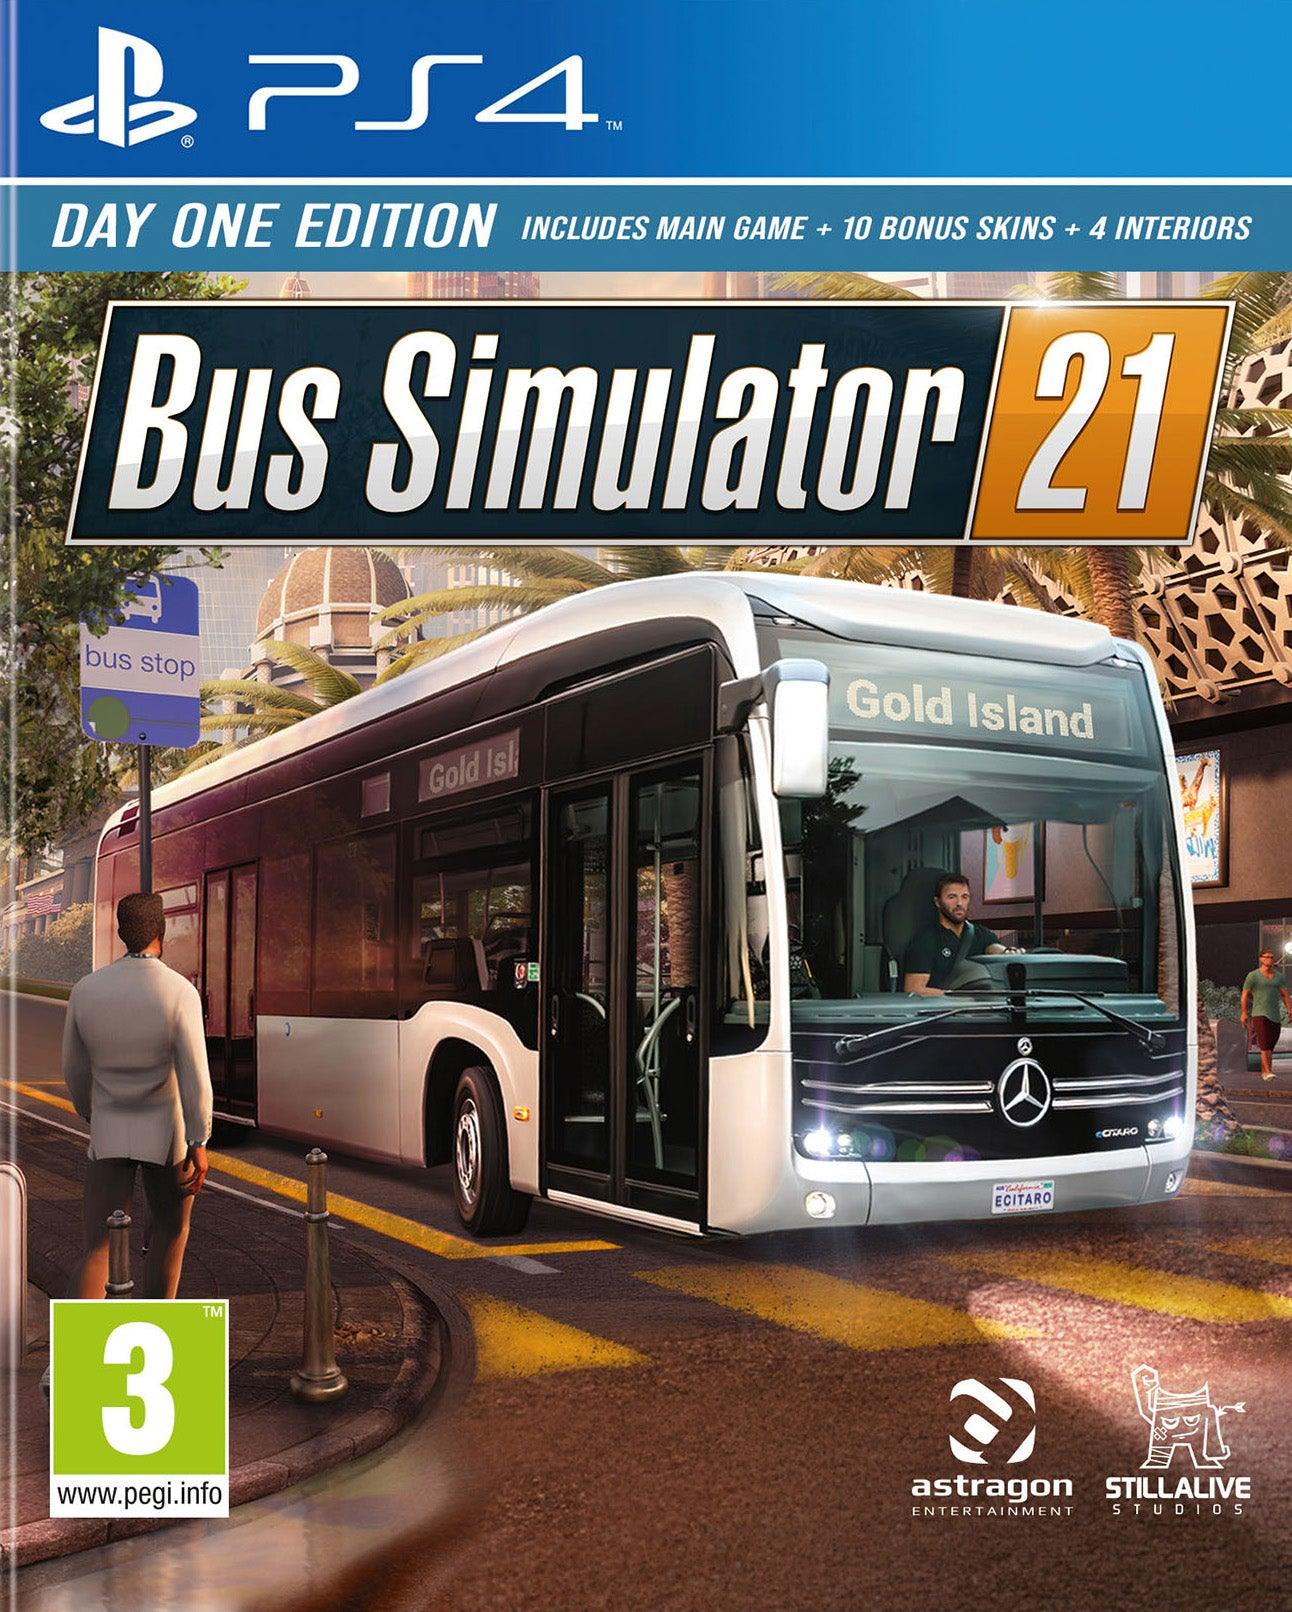 Bus Simulator 21 D1 Edition - Want a New Gadget